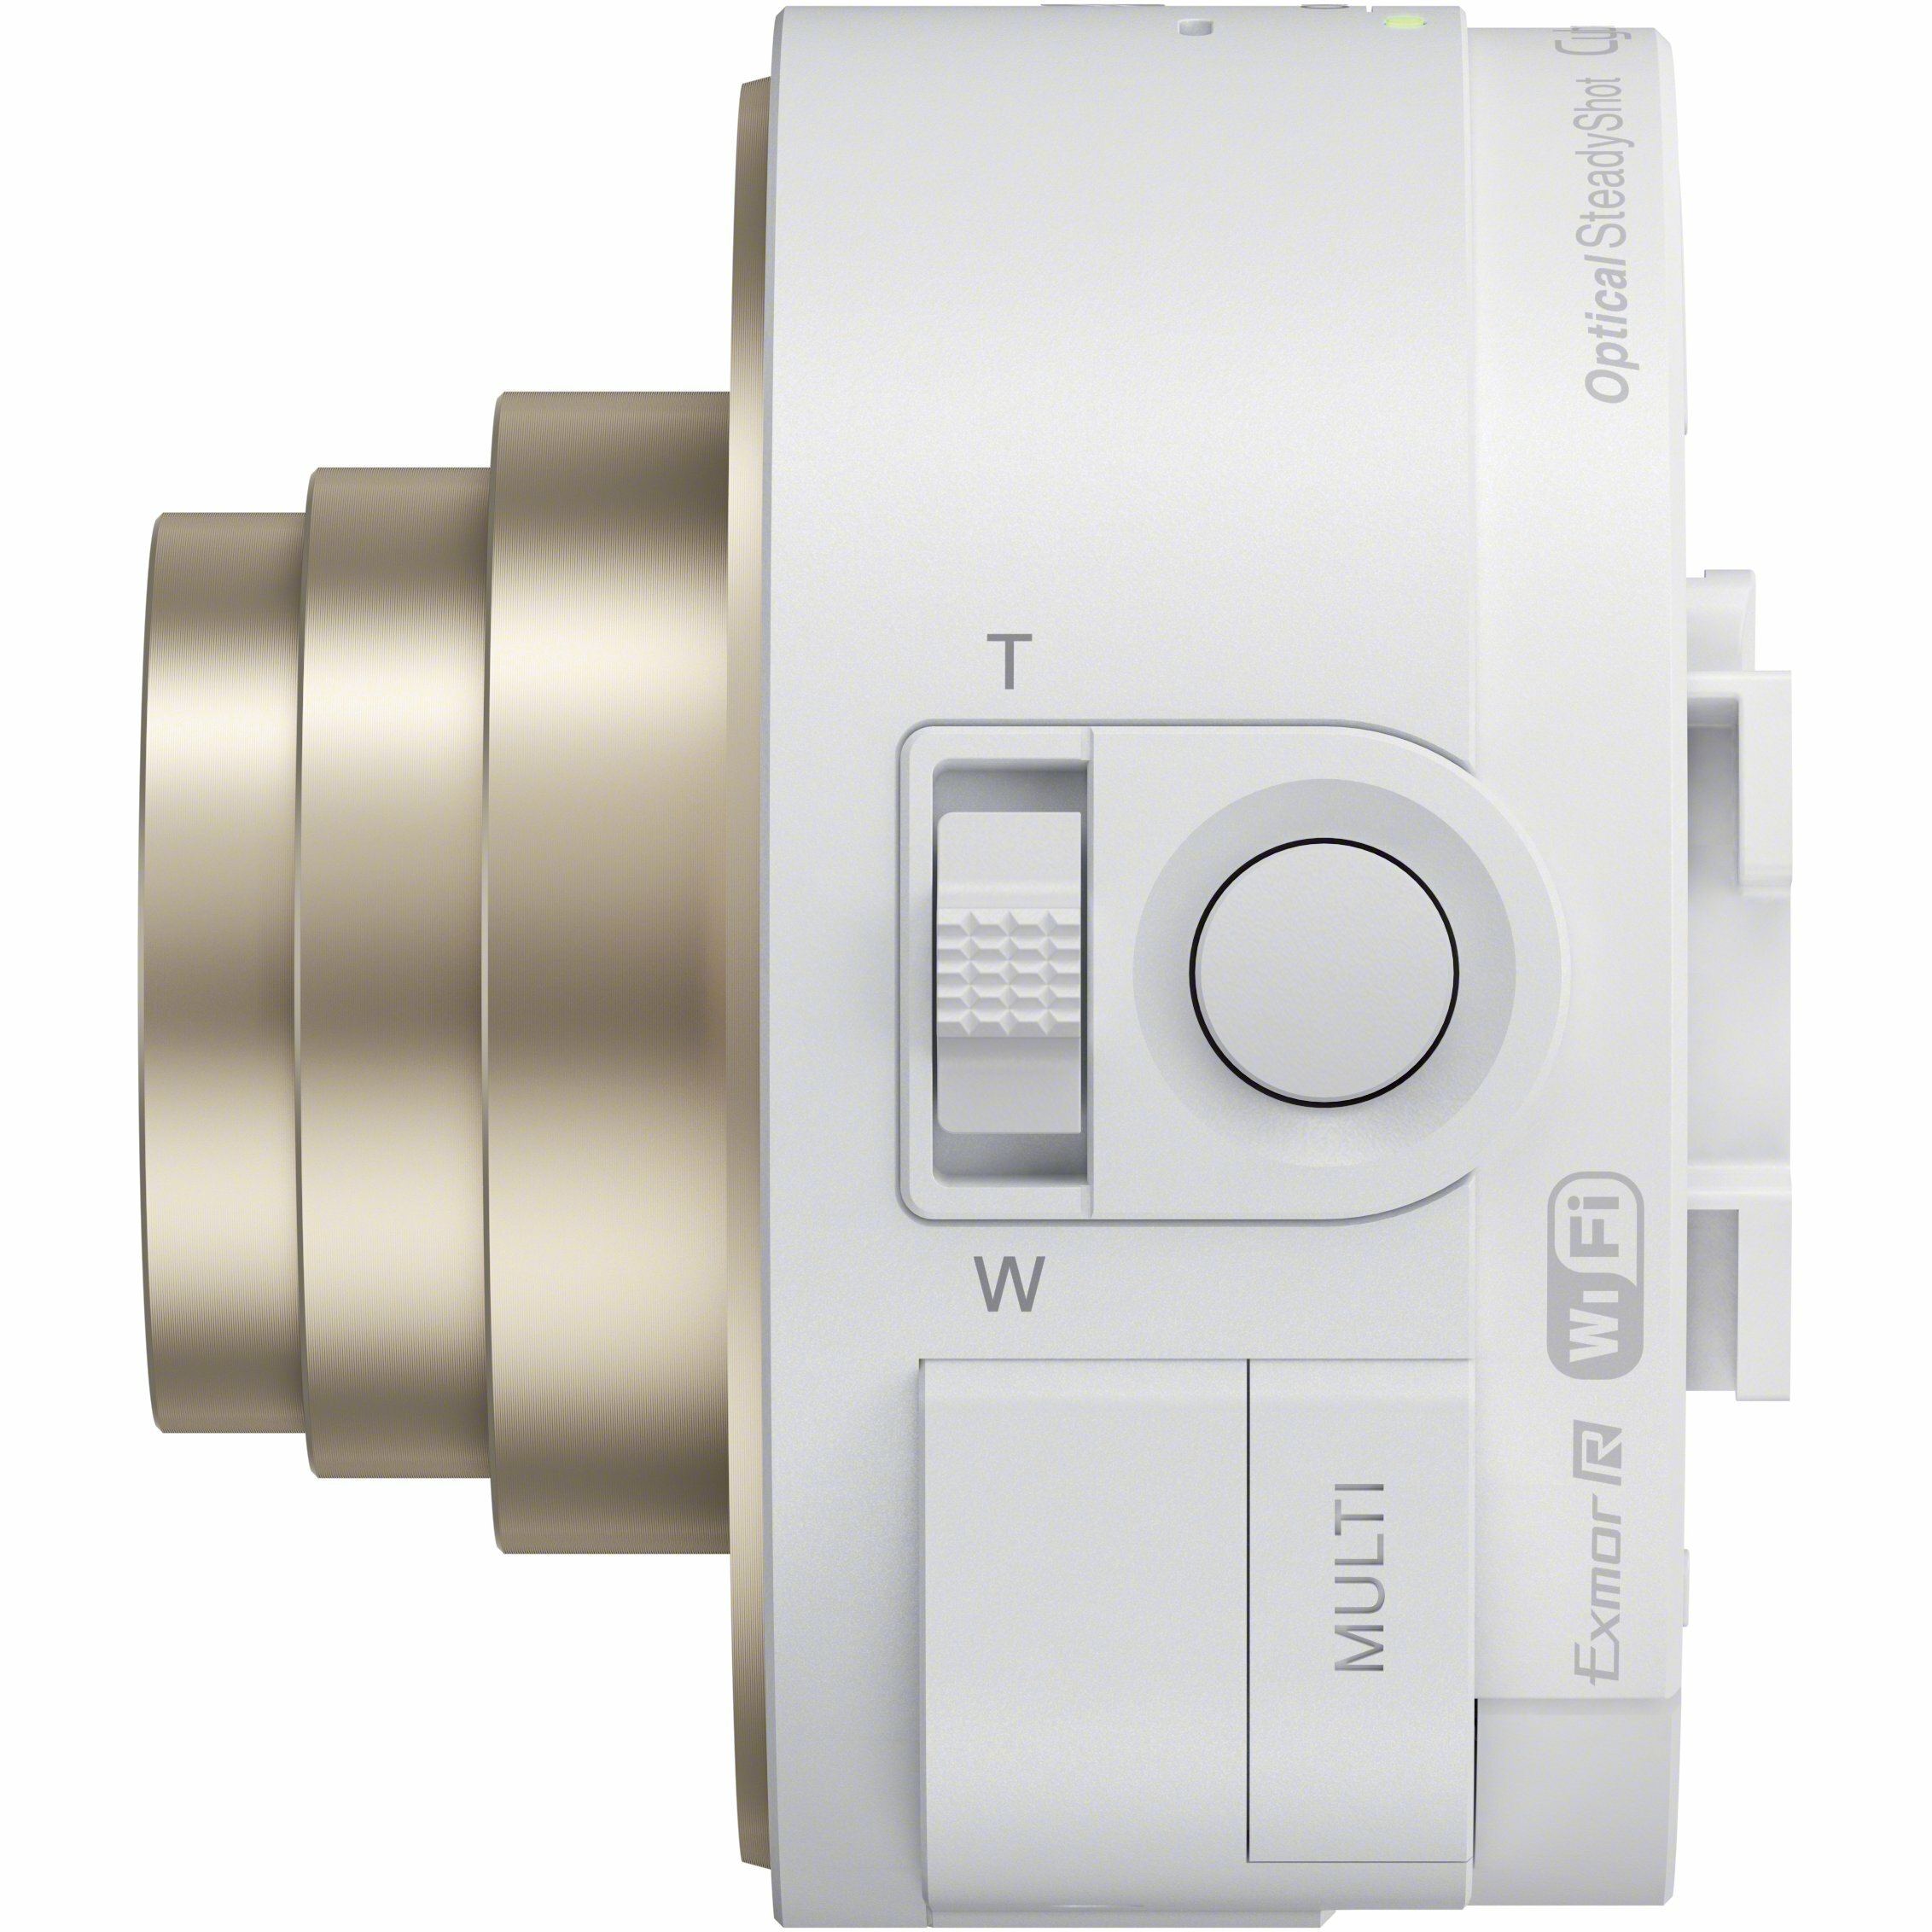 Sony DSC-QX10 Lens Style Camera - image 3 of 8